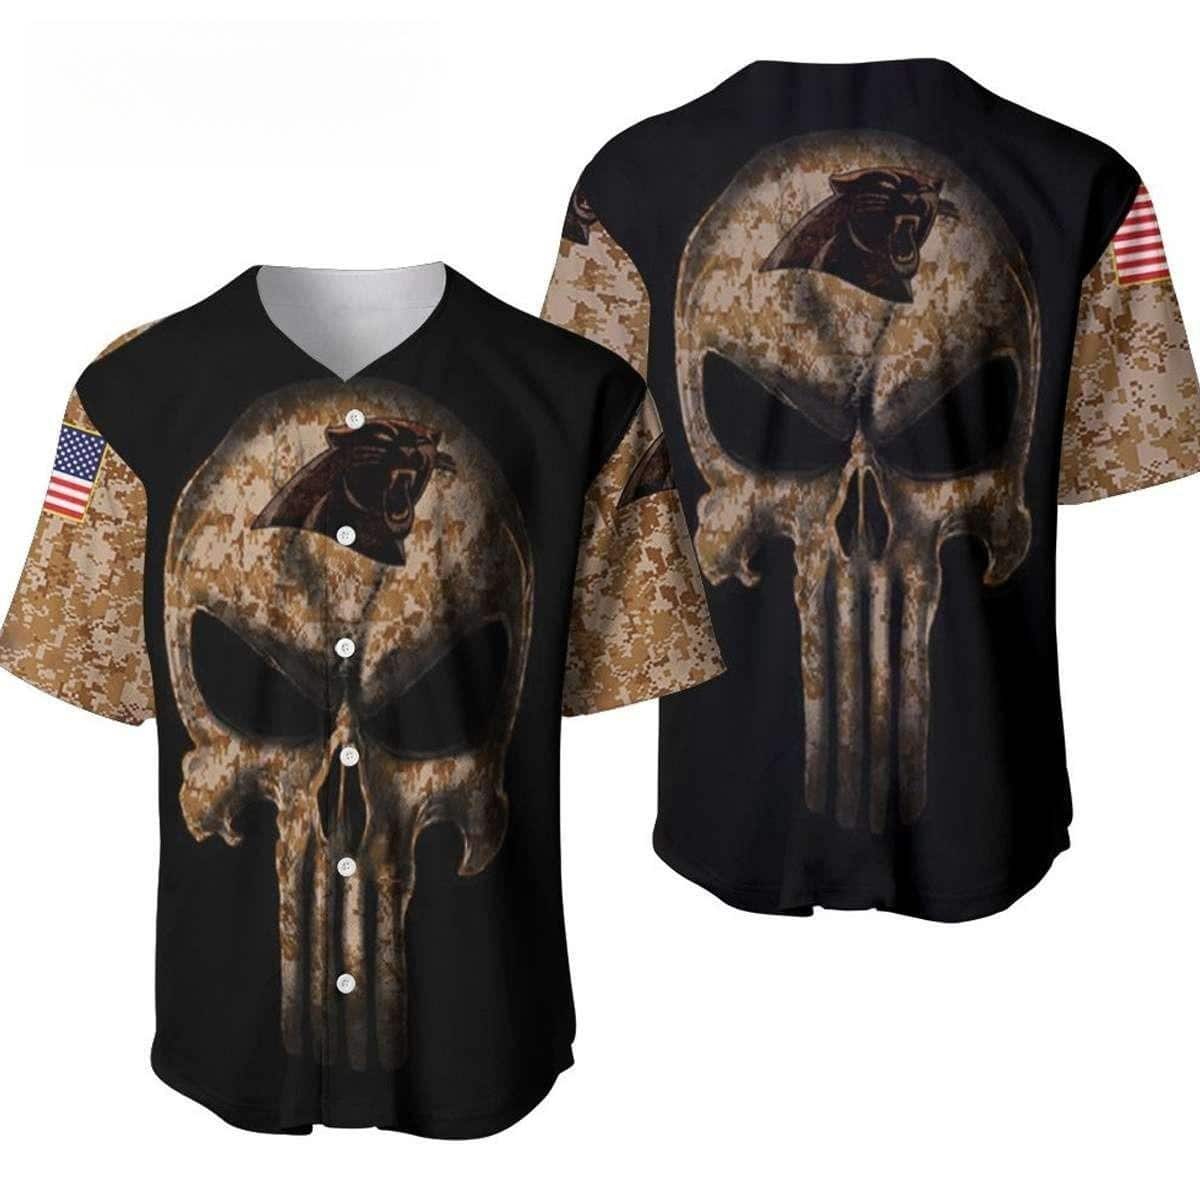 Carolina Panthers Baseball Jersey Camouflage Skull USA Flag Gift For NFL Fans